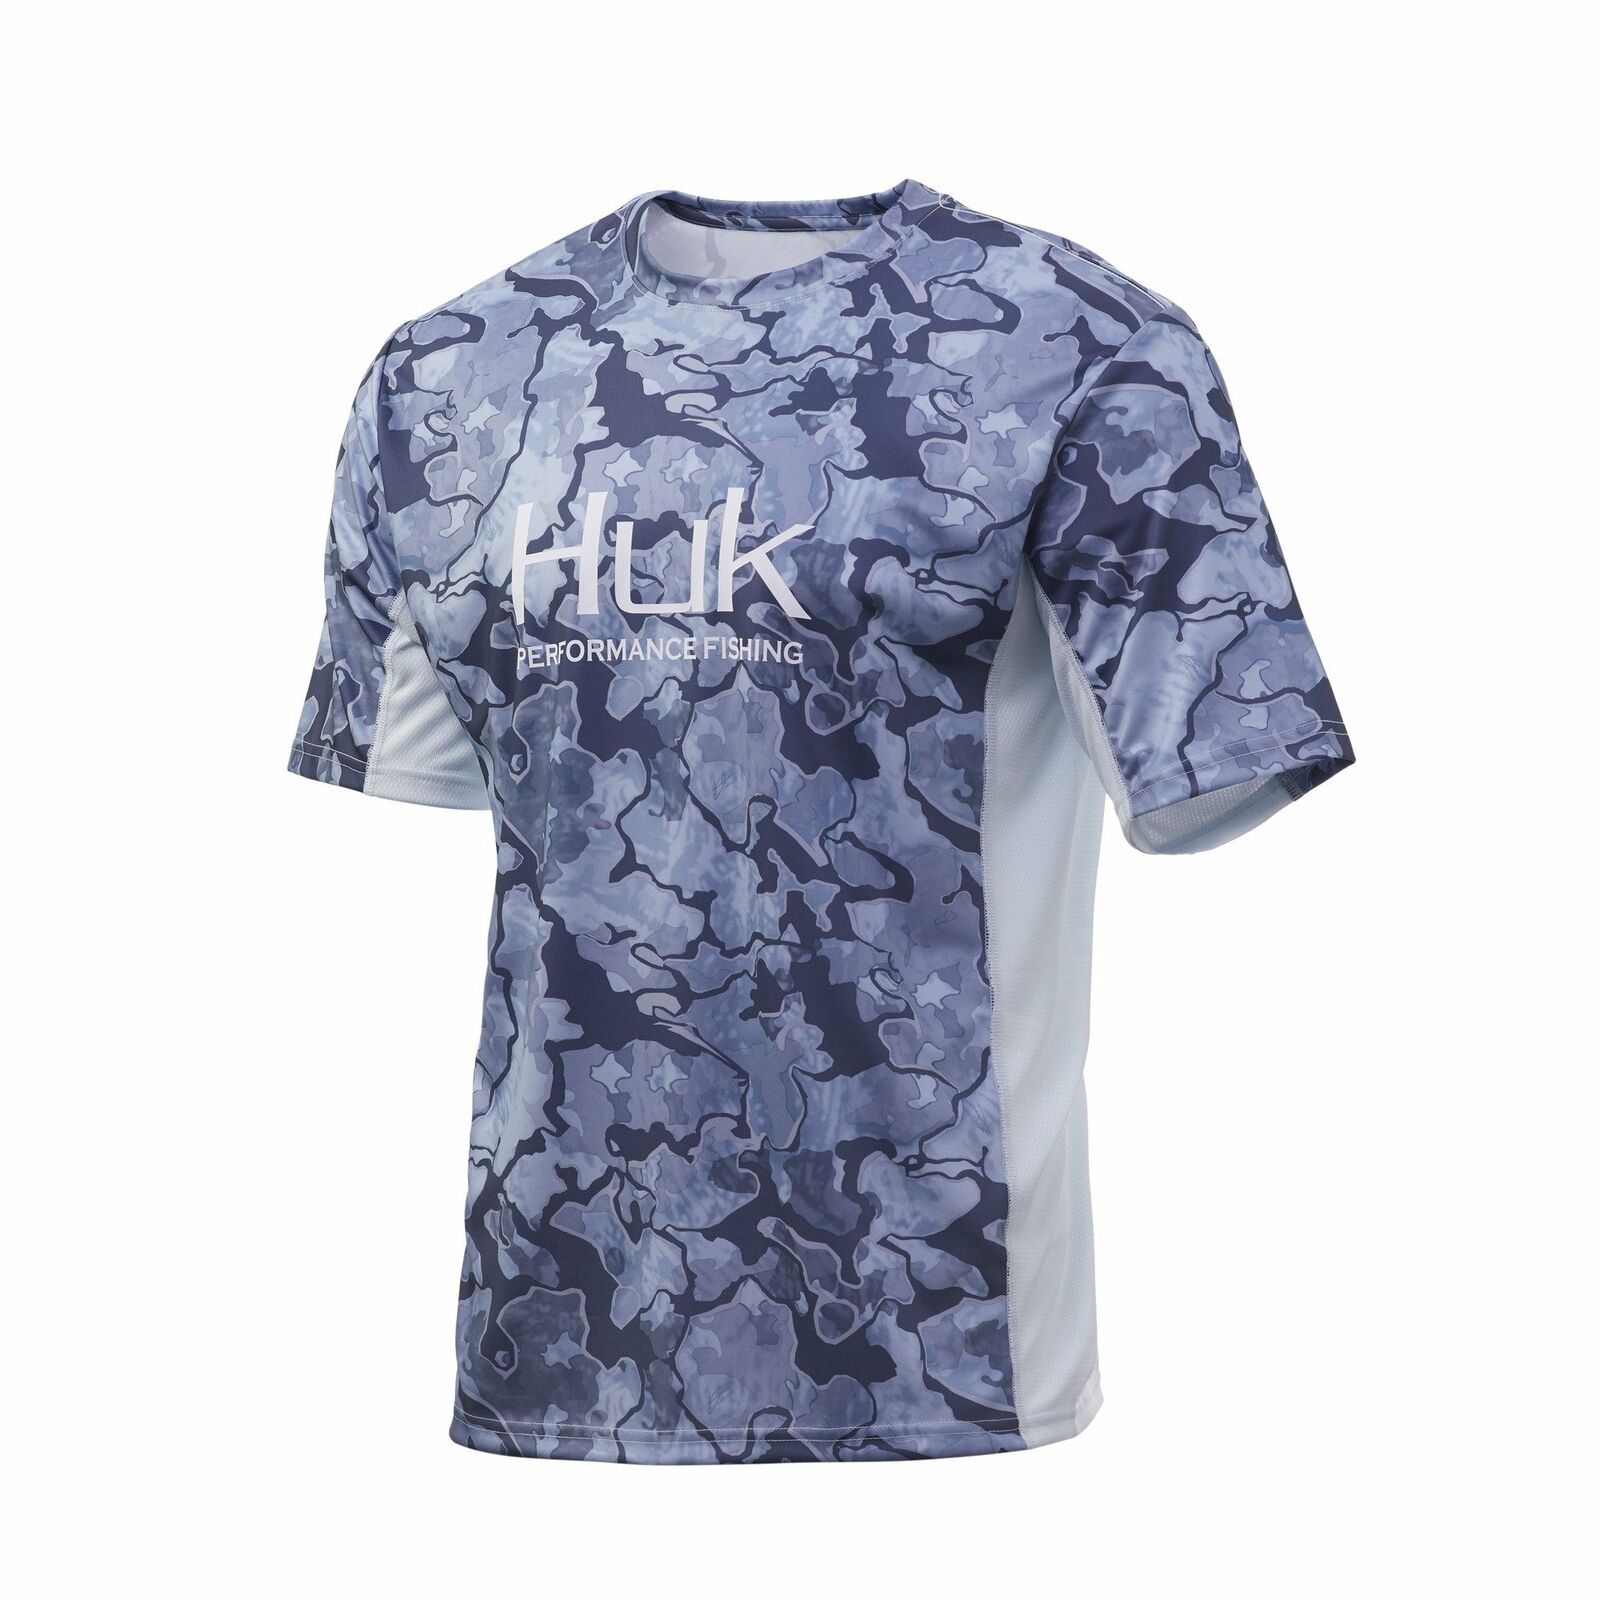 Huk Icon x Men’s Camo Long Sleeve Tee Hannibal Bank / S